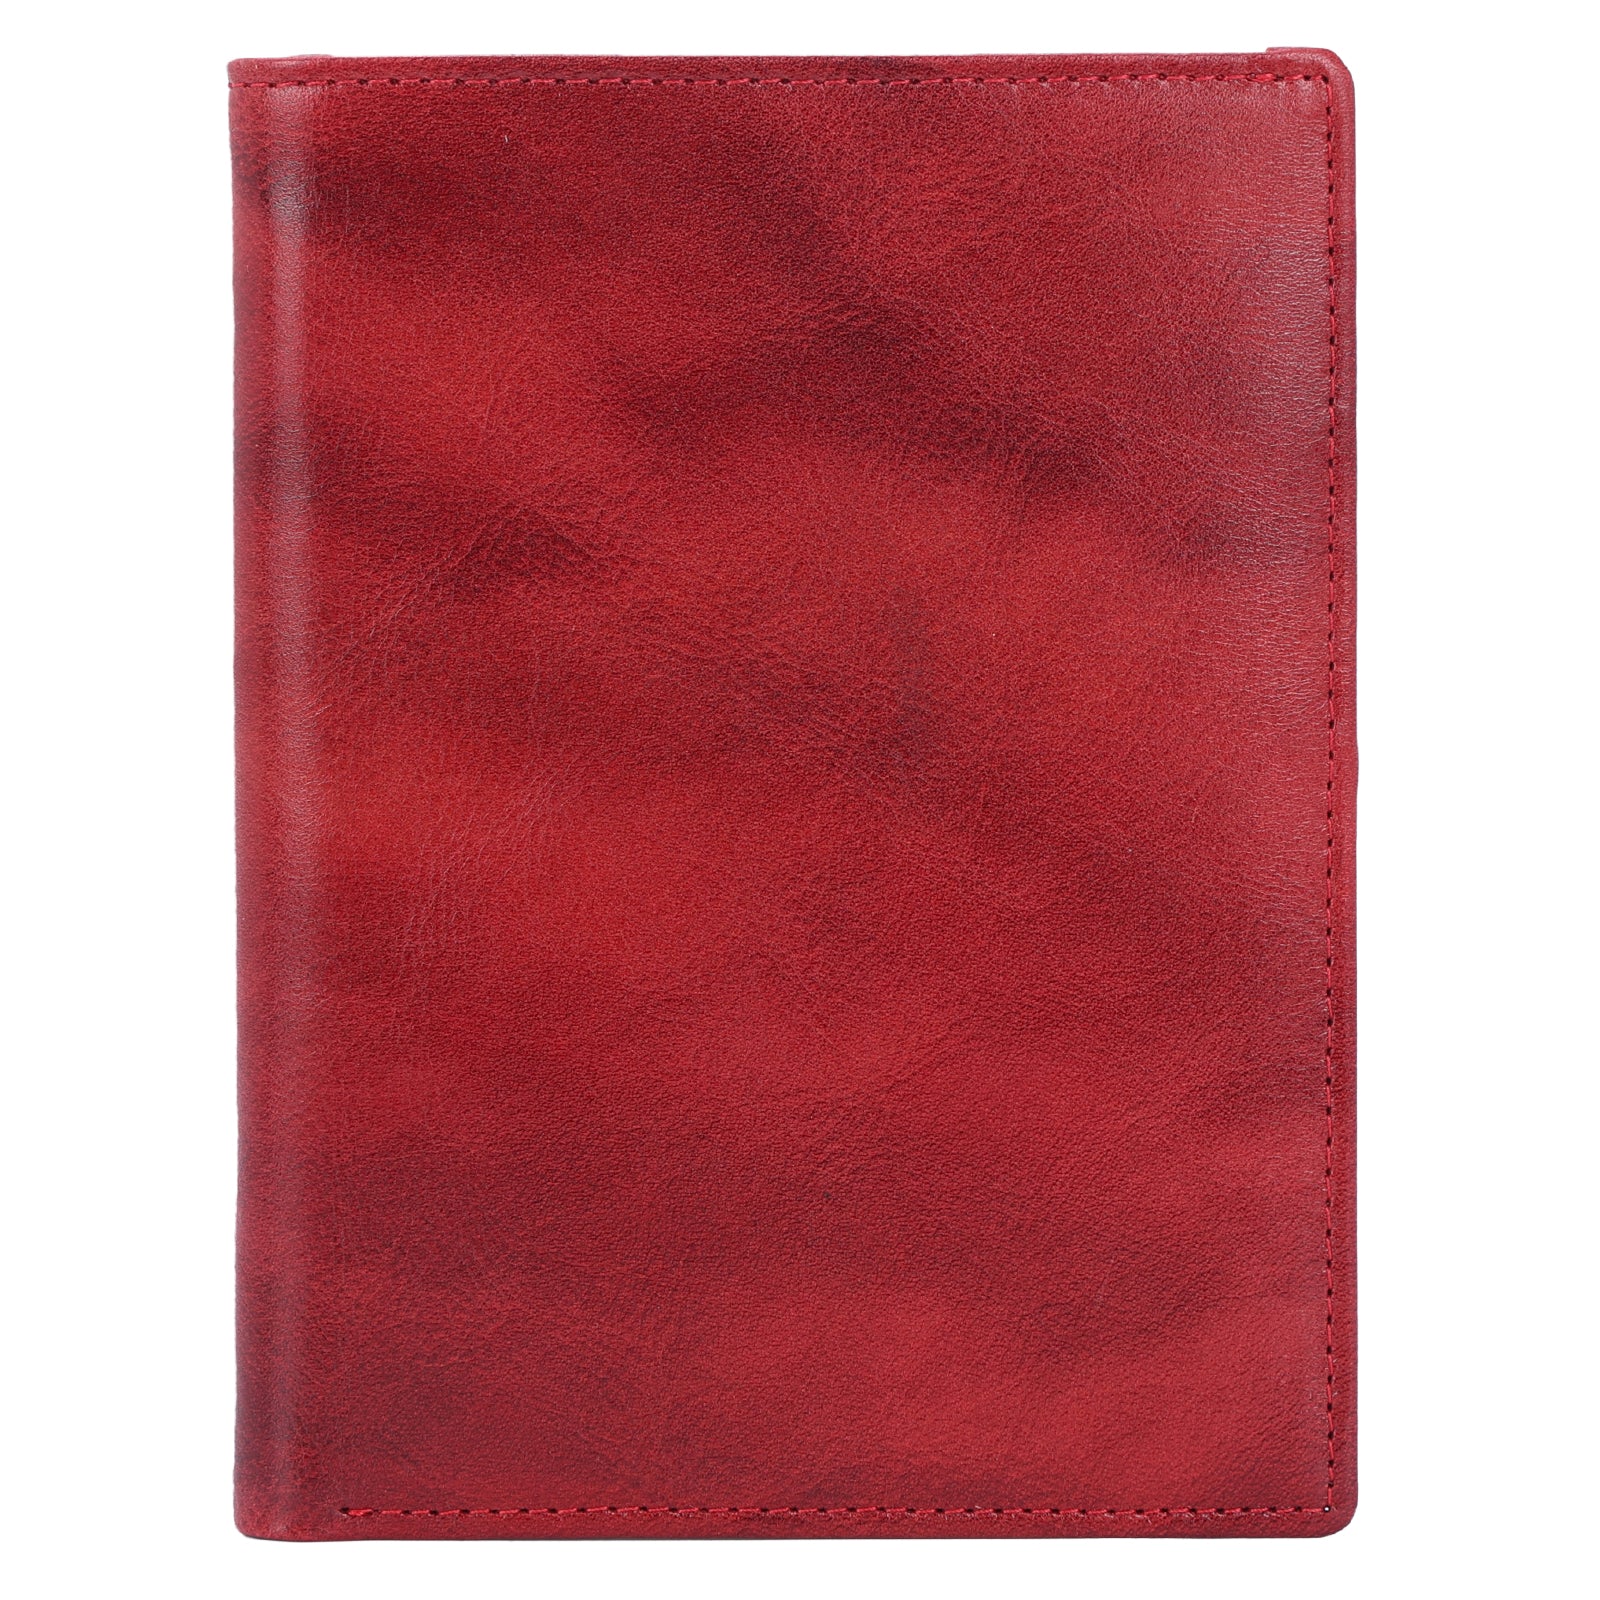 Polare RFID Blocking Leather Passport Holder Travel Bifold Wallet (Red)